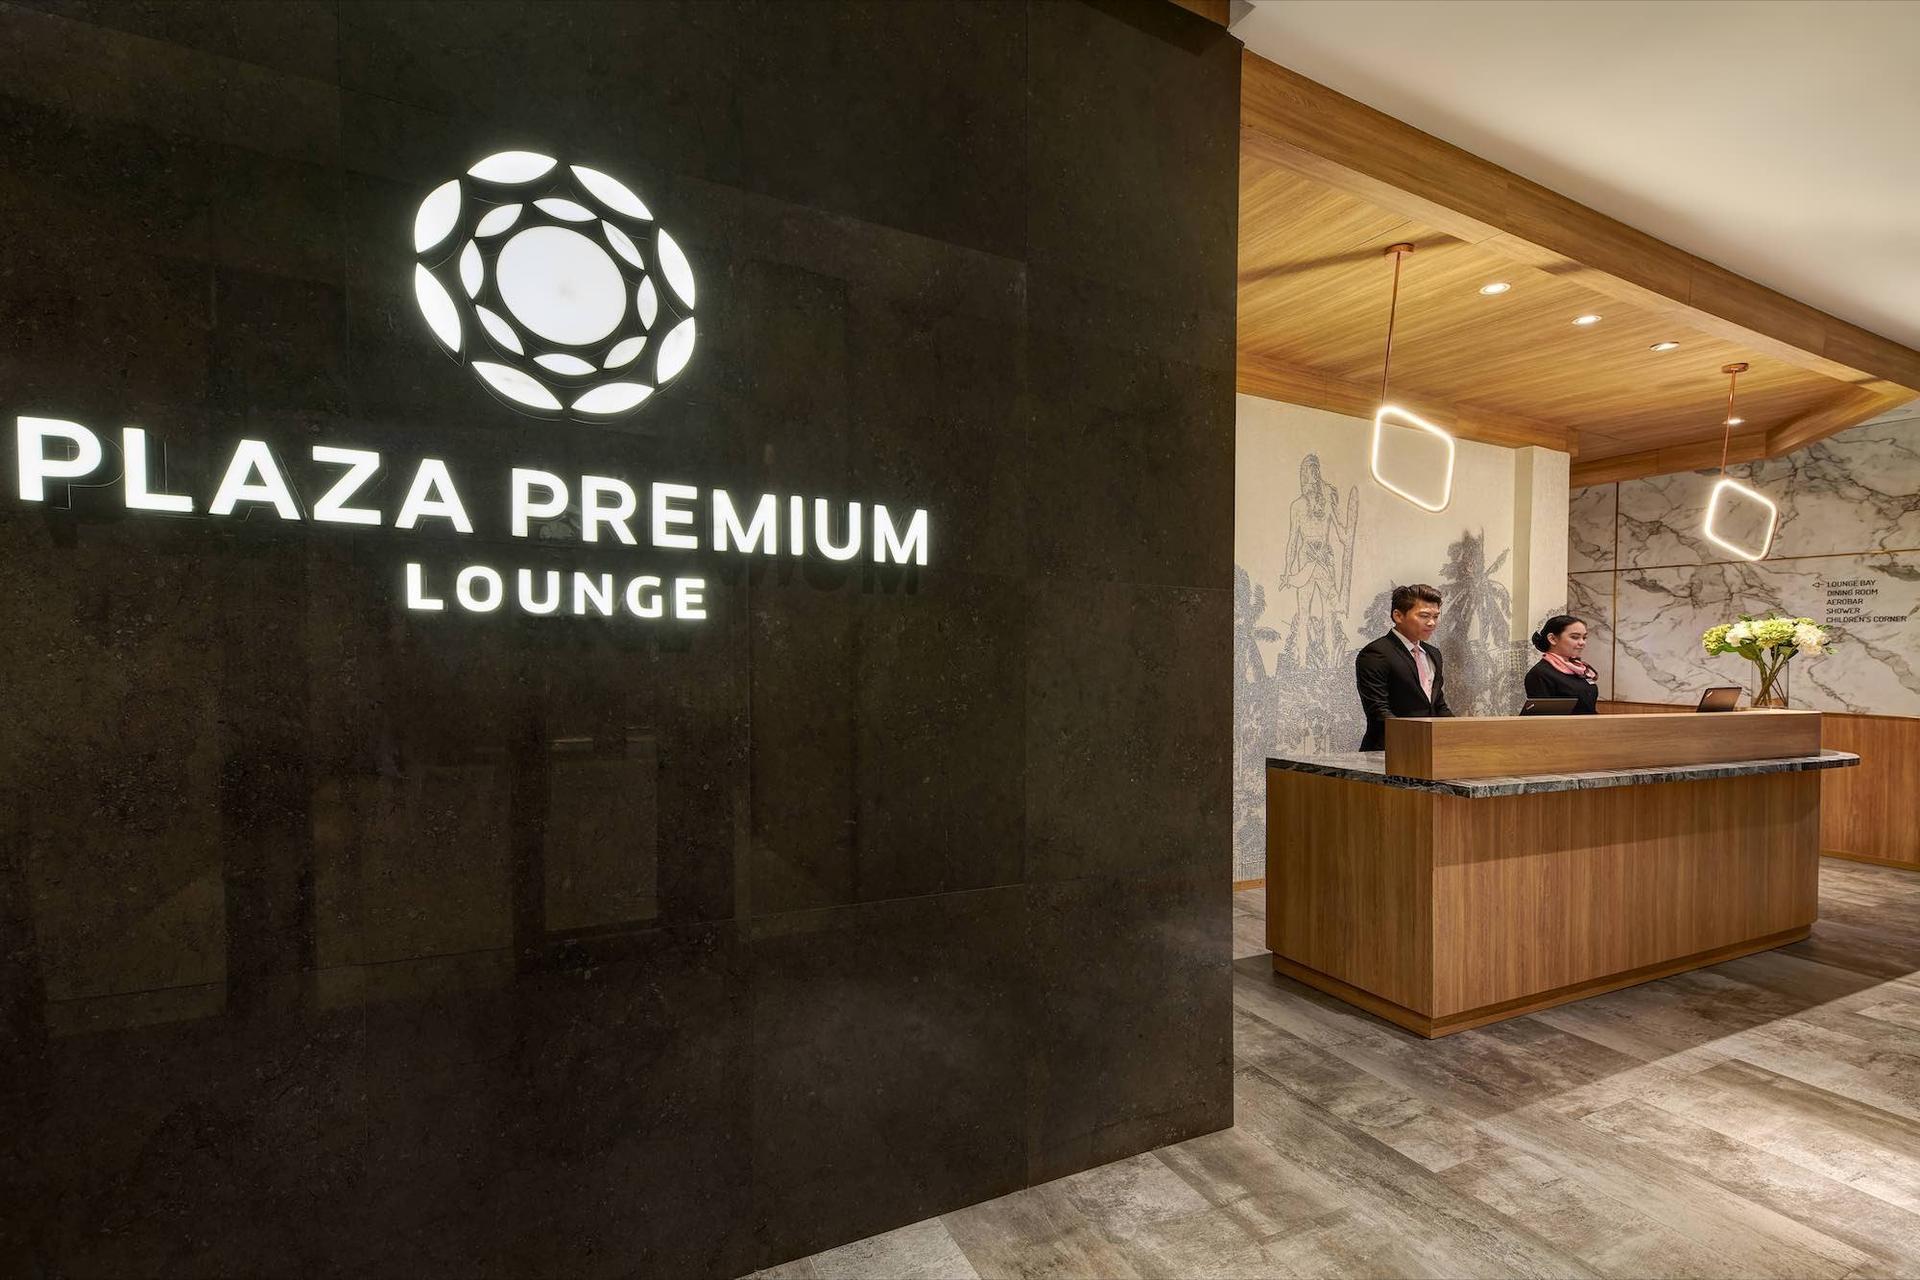 Plaza Premium Lounge image 11 of 22